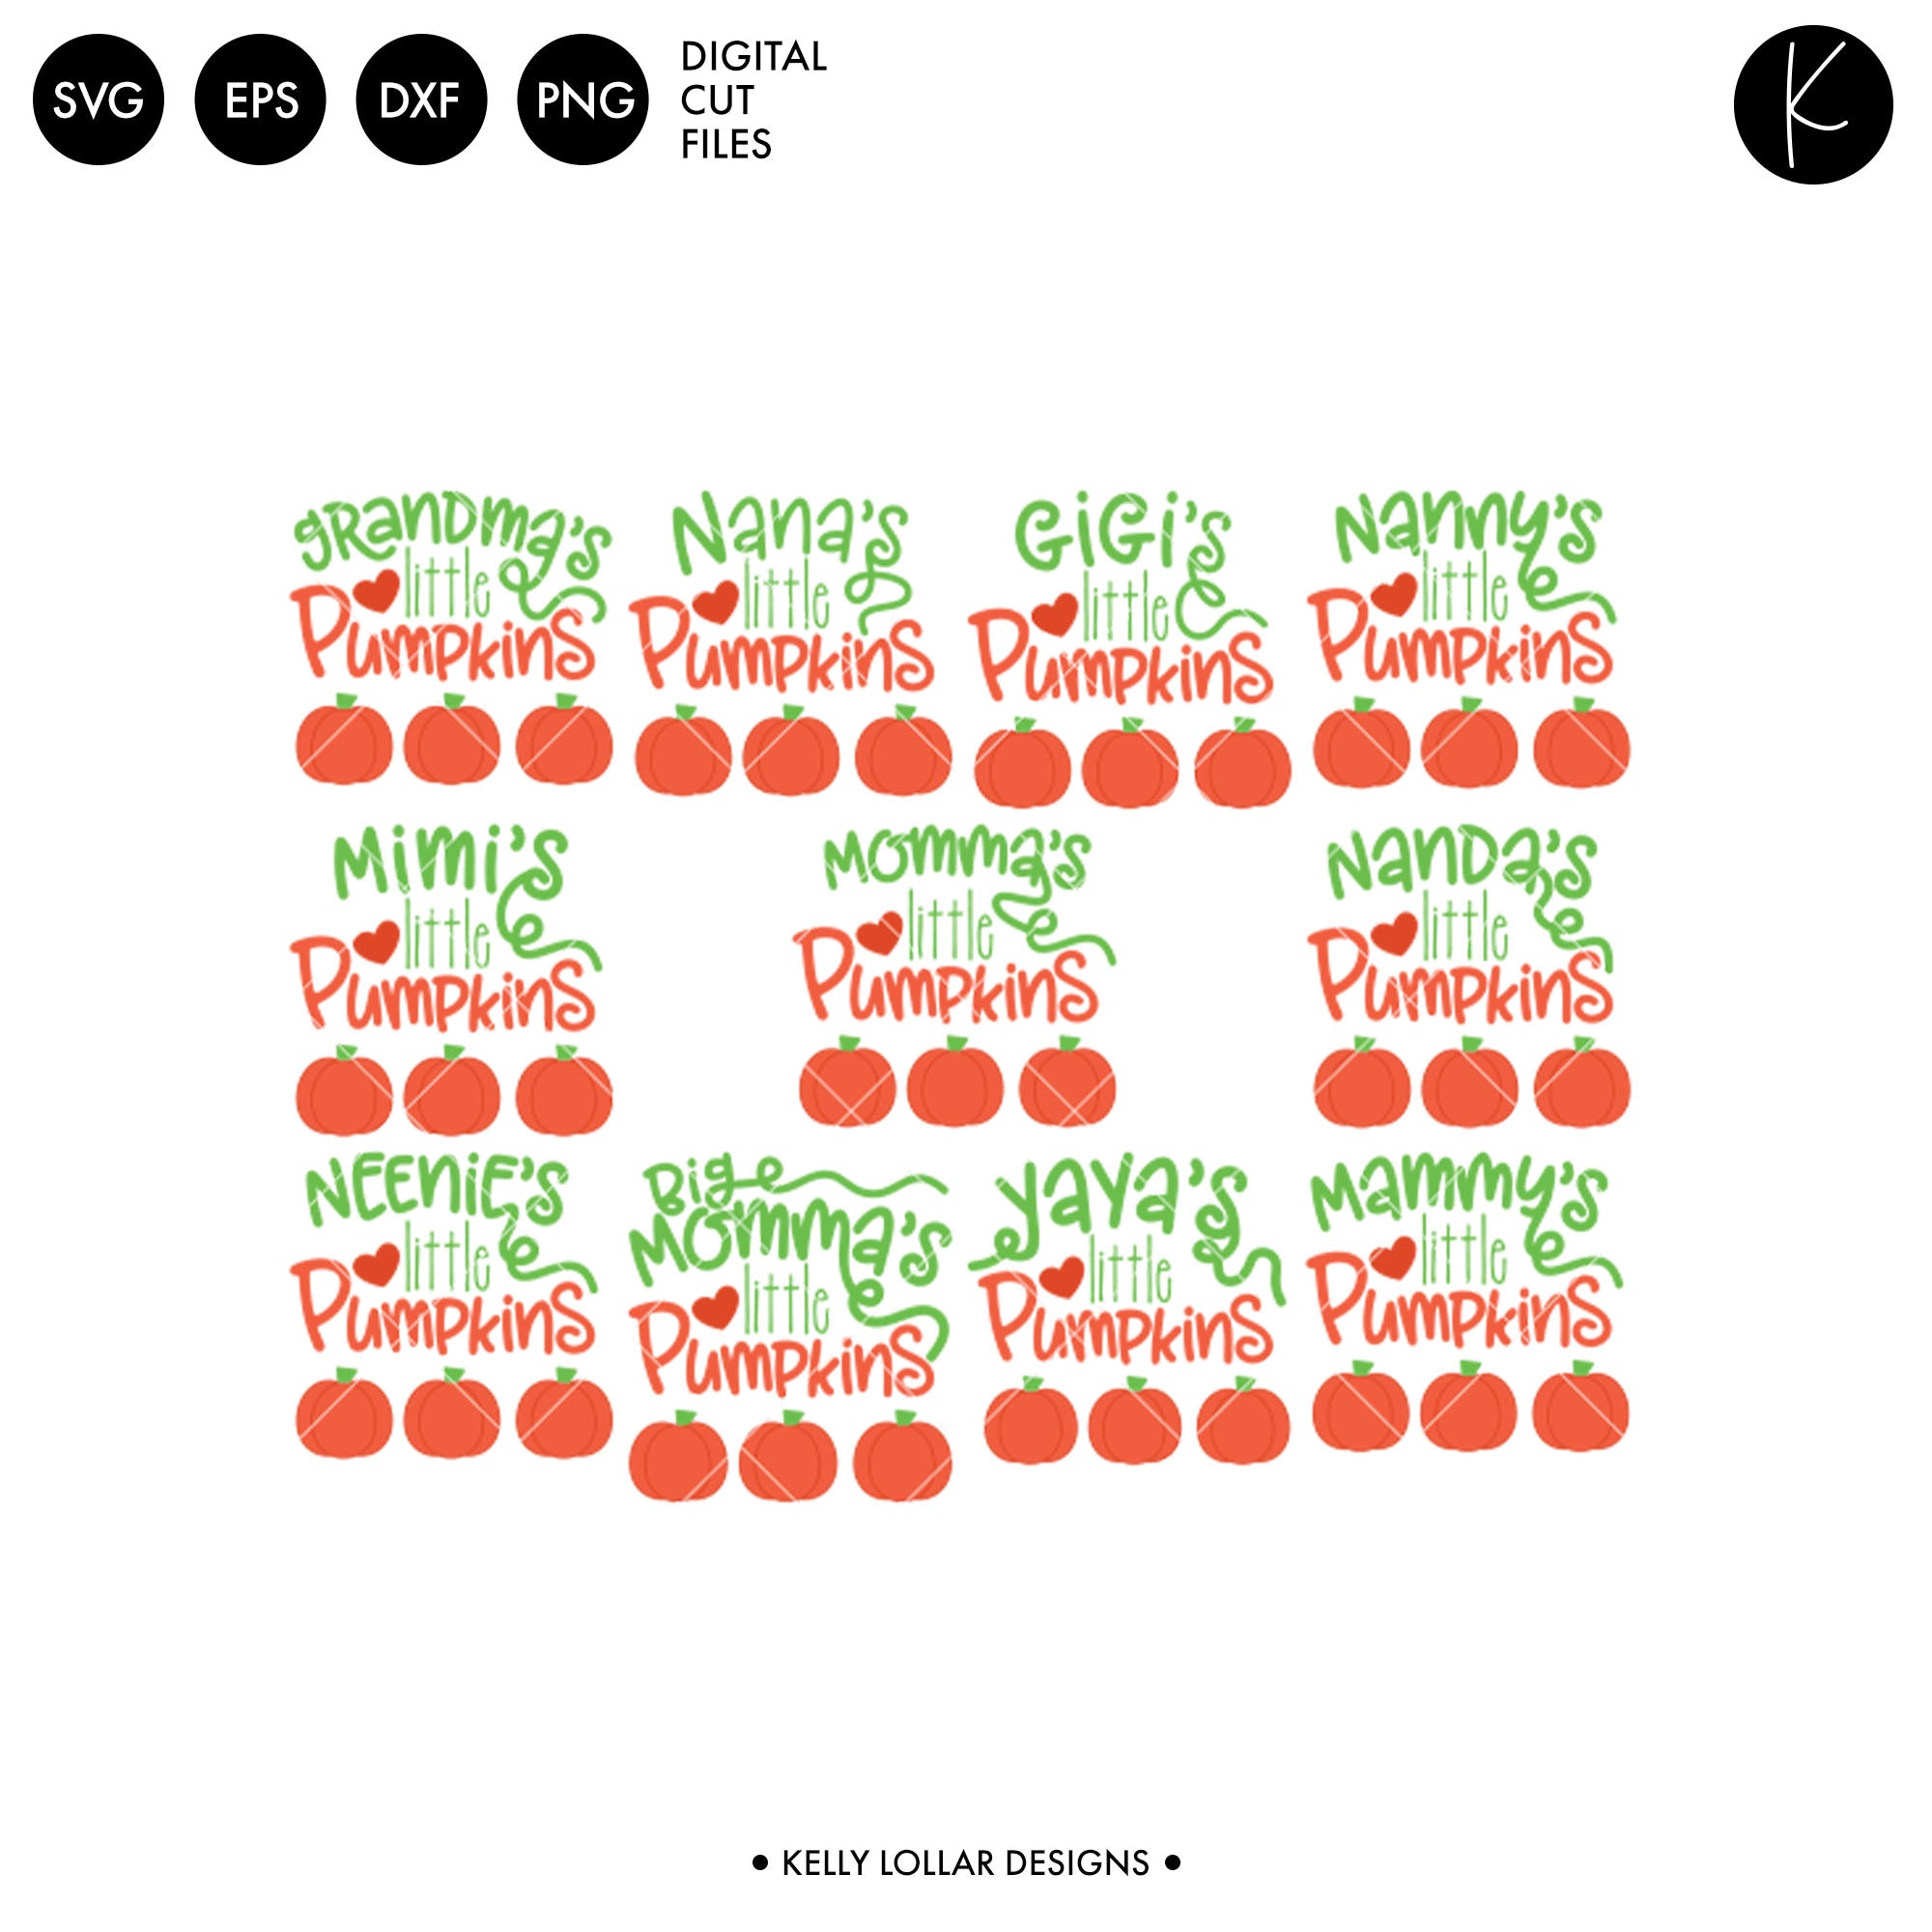 Download Grandma's Little Pumpkins SVG Cut File | Kelly Lollar ...